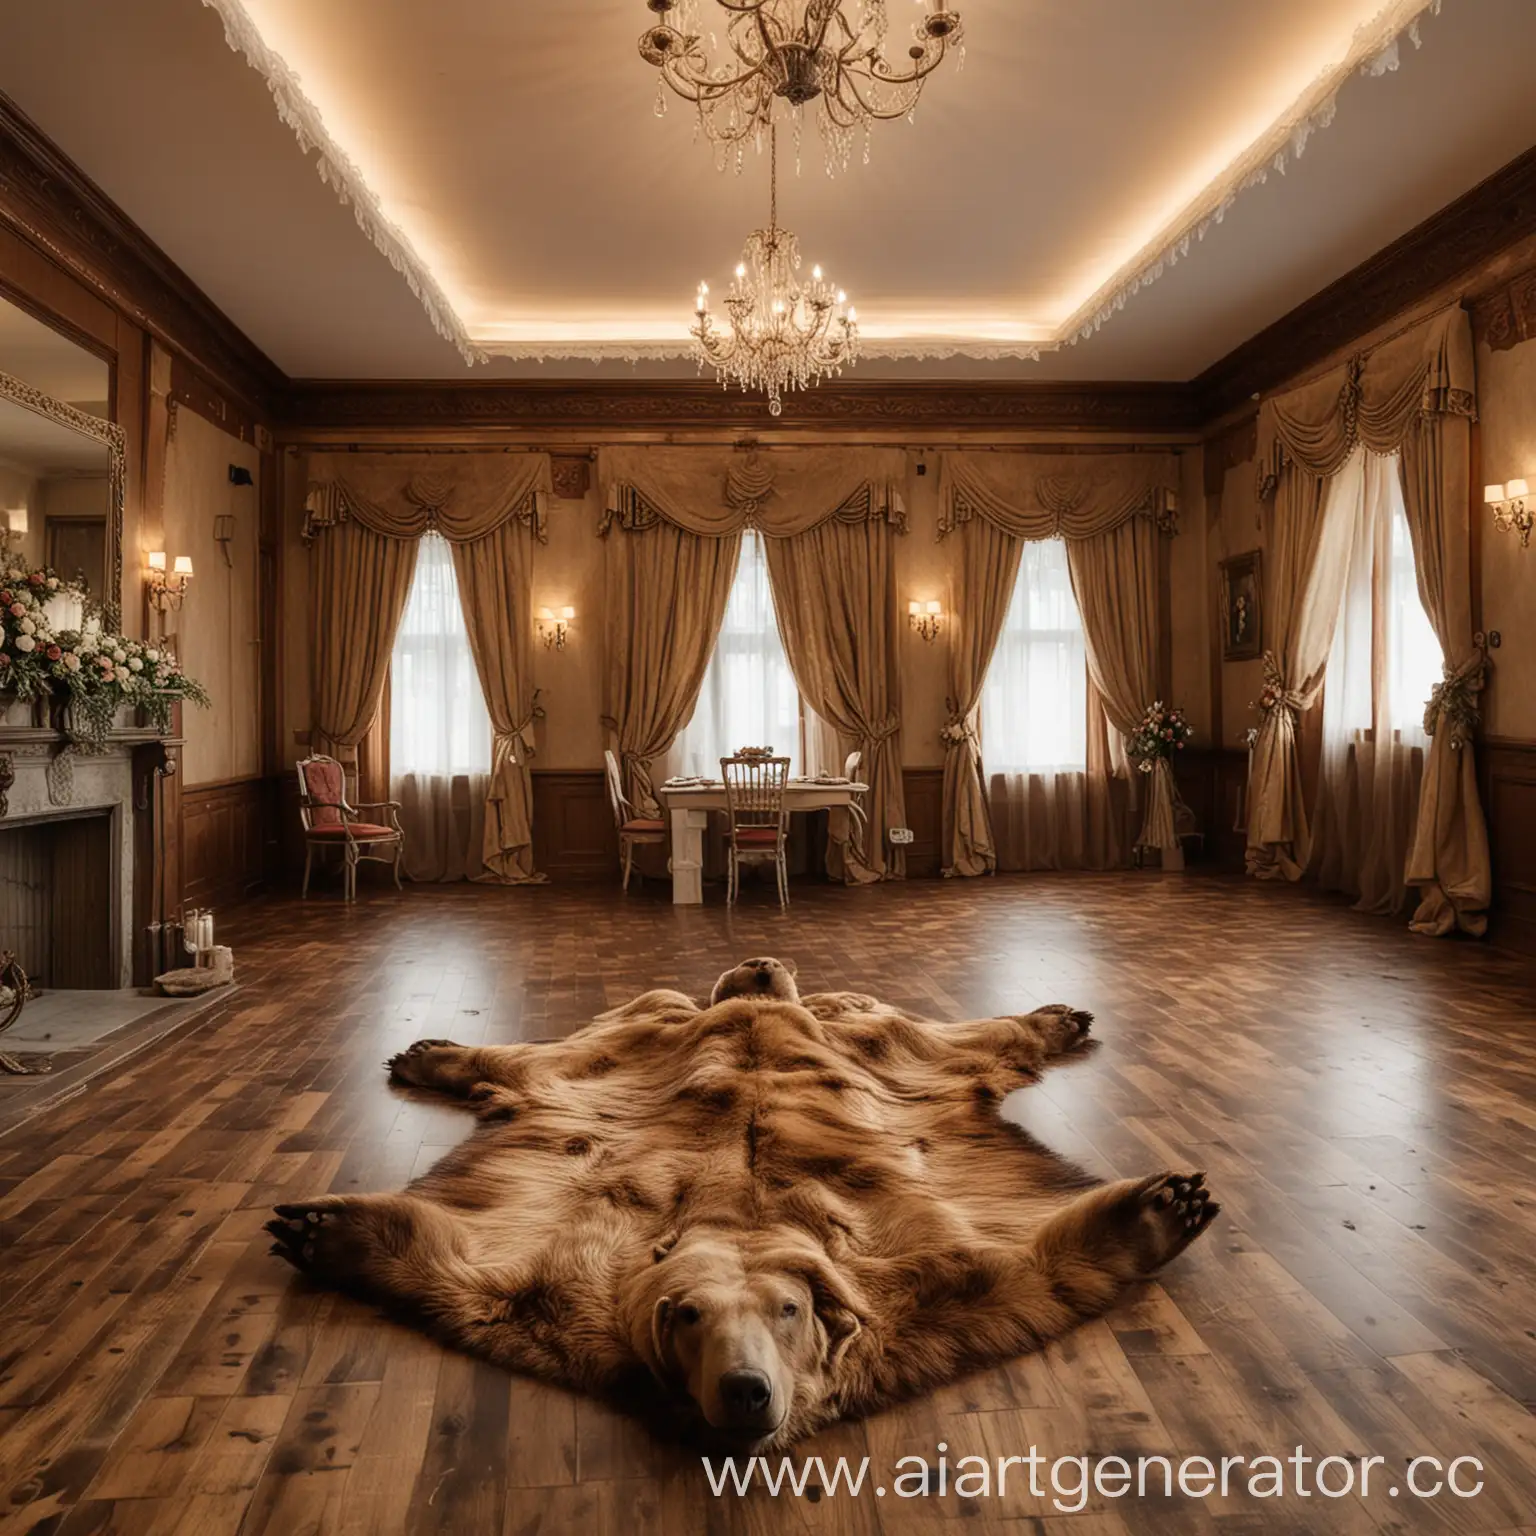 свадебная комната с шкурой медведя на полу